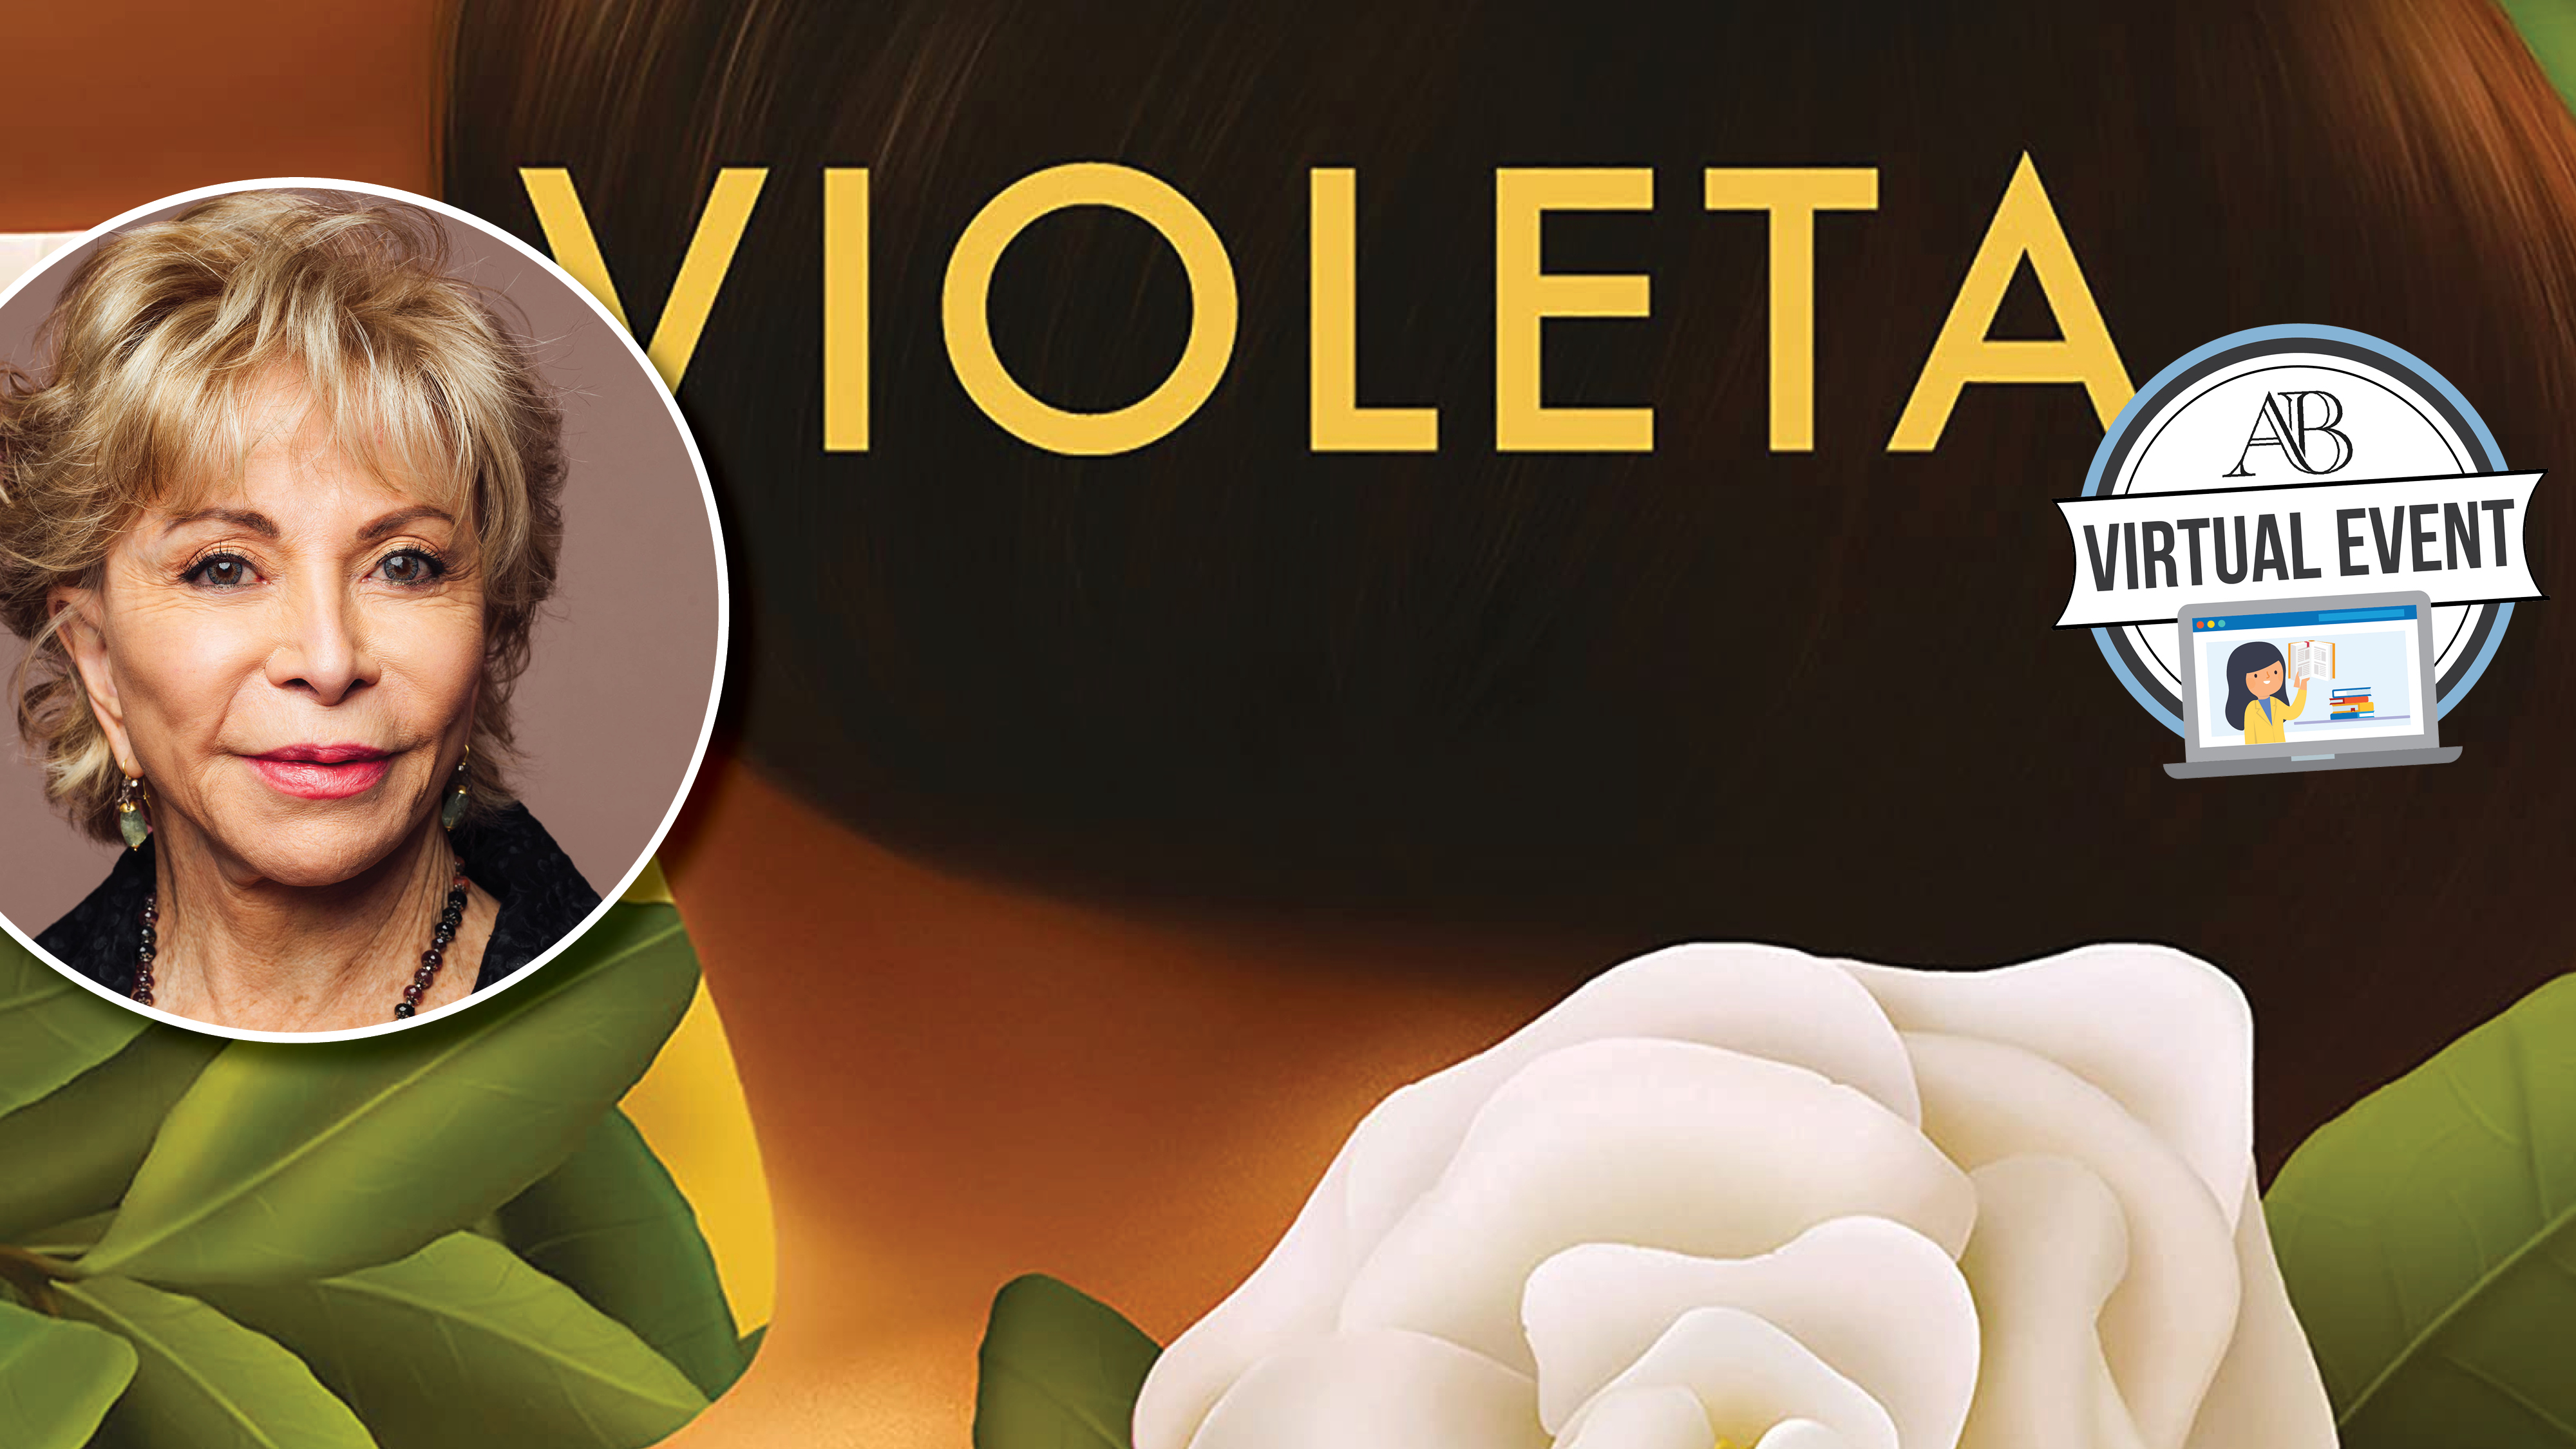 Virtual event with Isabel Allende/Violeta